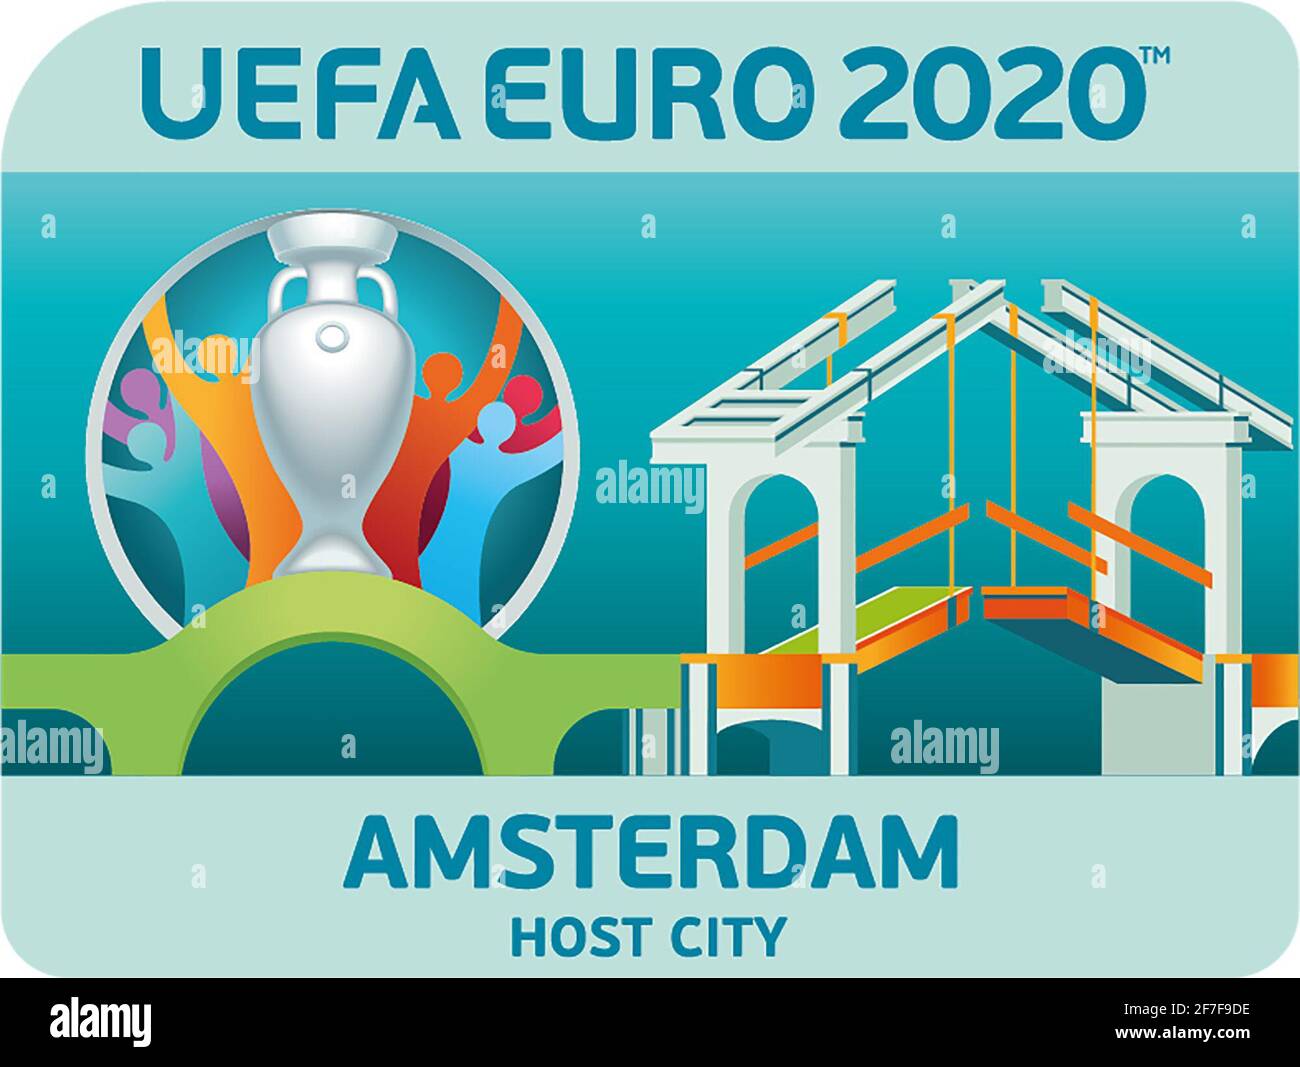 UEFA EURO 2020 Logo Host City Amsterdam Stock Photo